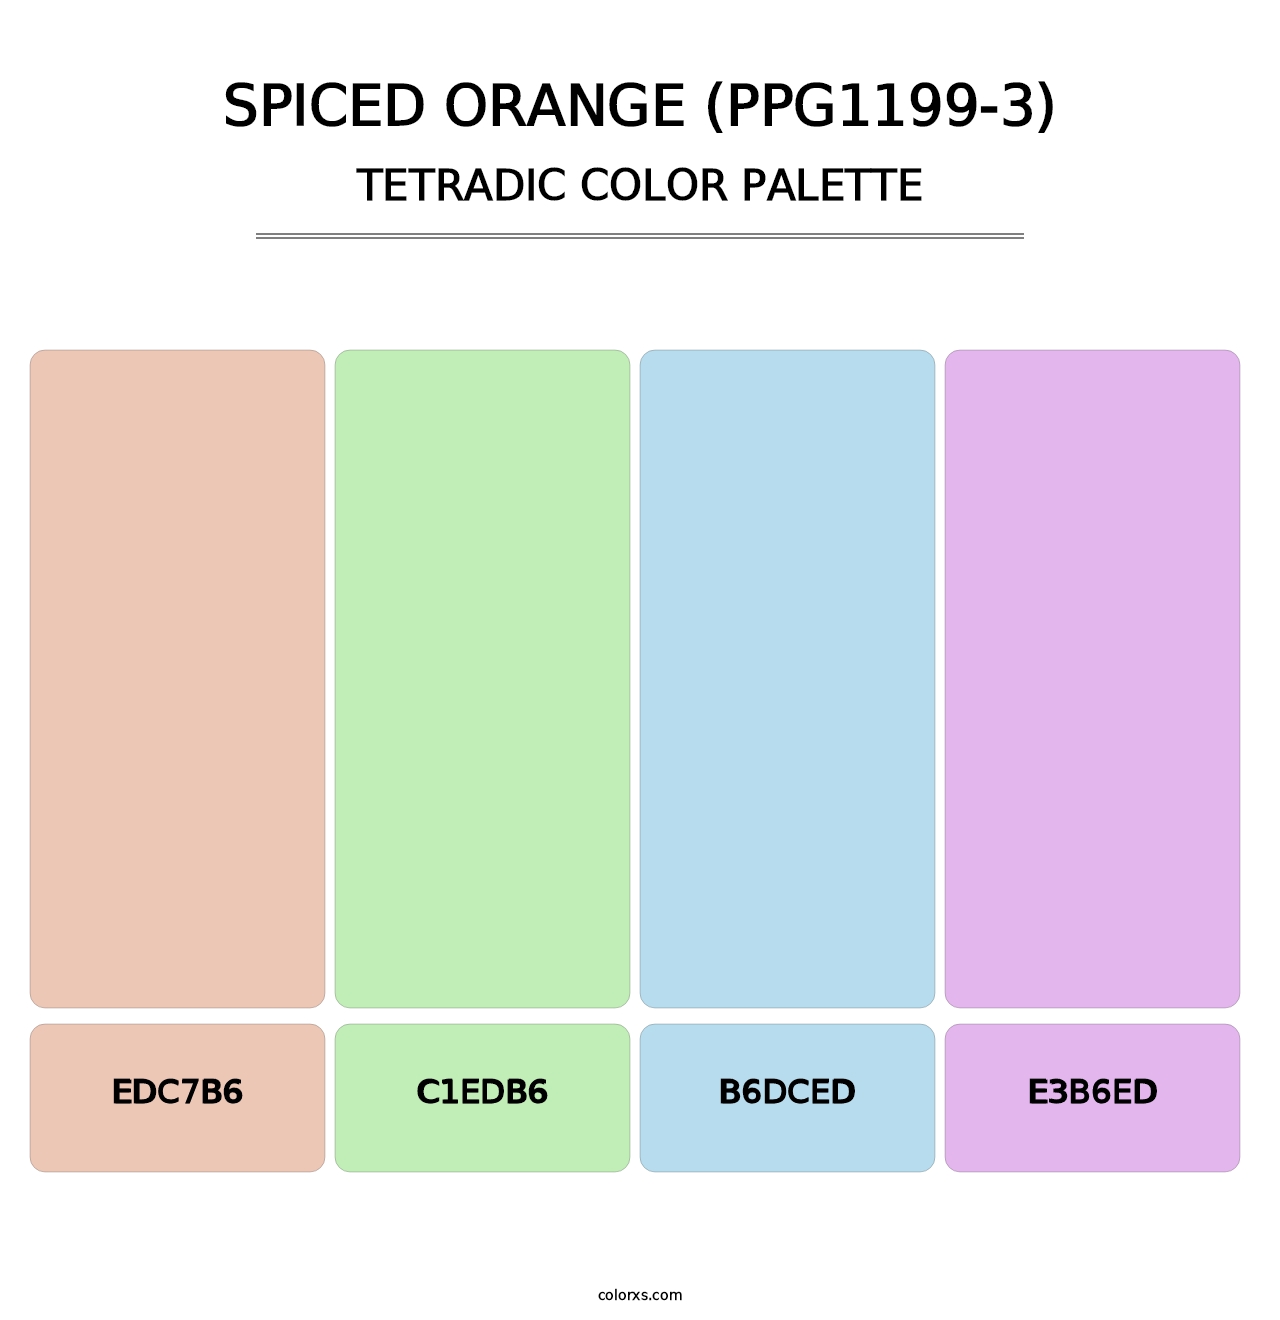 Spiced Orange (PPG1199-3) - Tetradic Color Palette